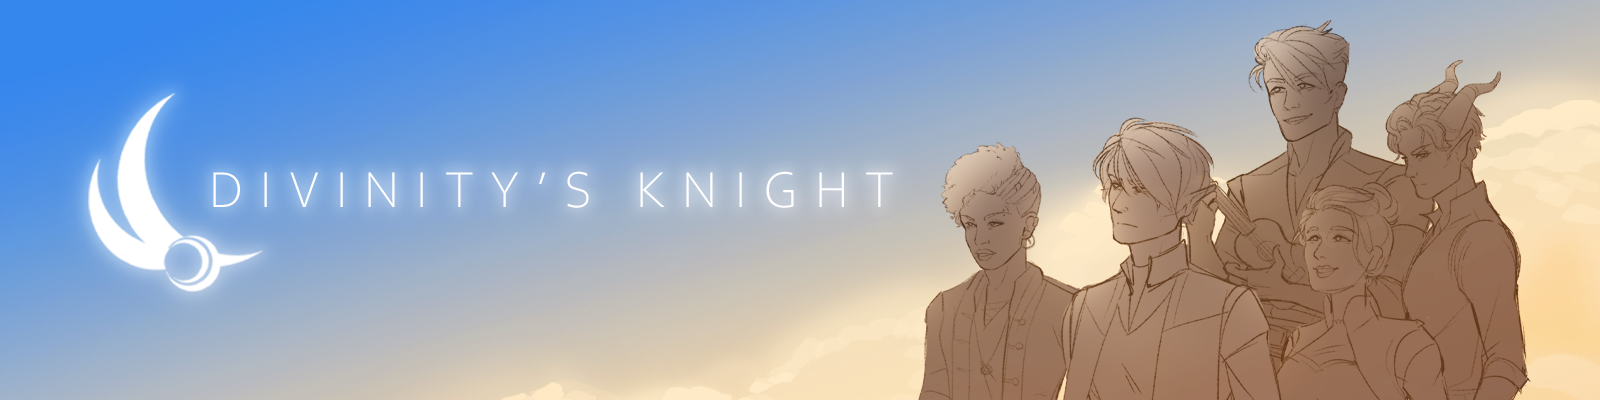 Divinity's Knight